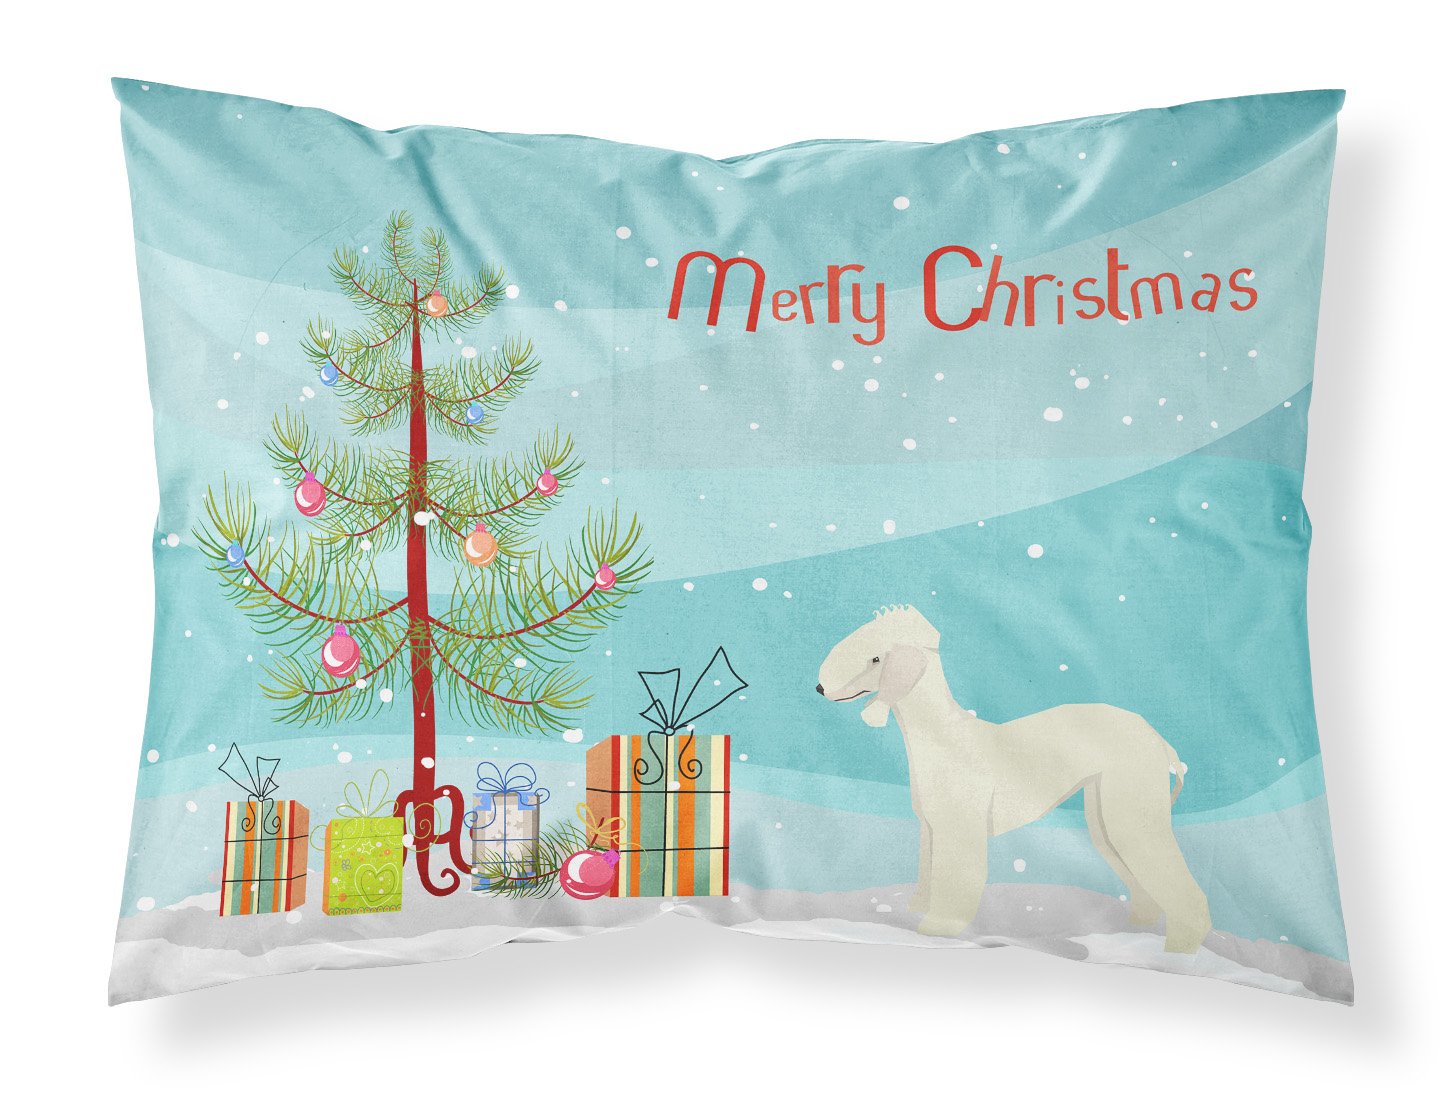 Bedlington Terrier Christmas Tree Fabric Standard Pillowcase CK3520PILLOWCASE by Caroline's Treasures